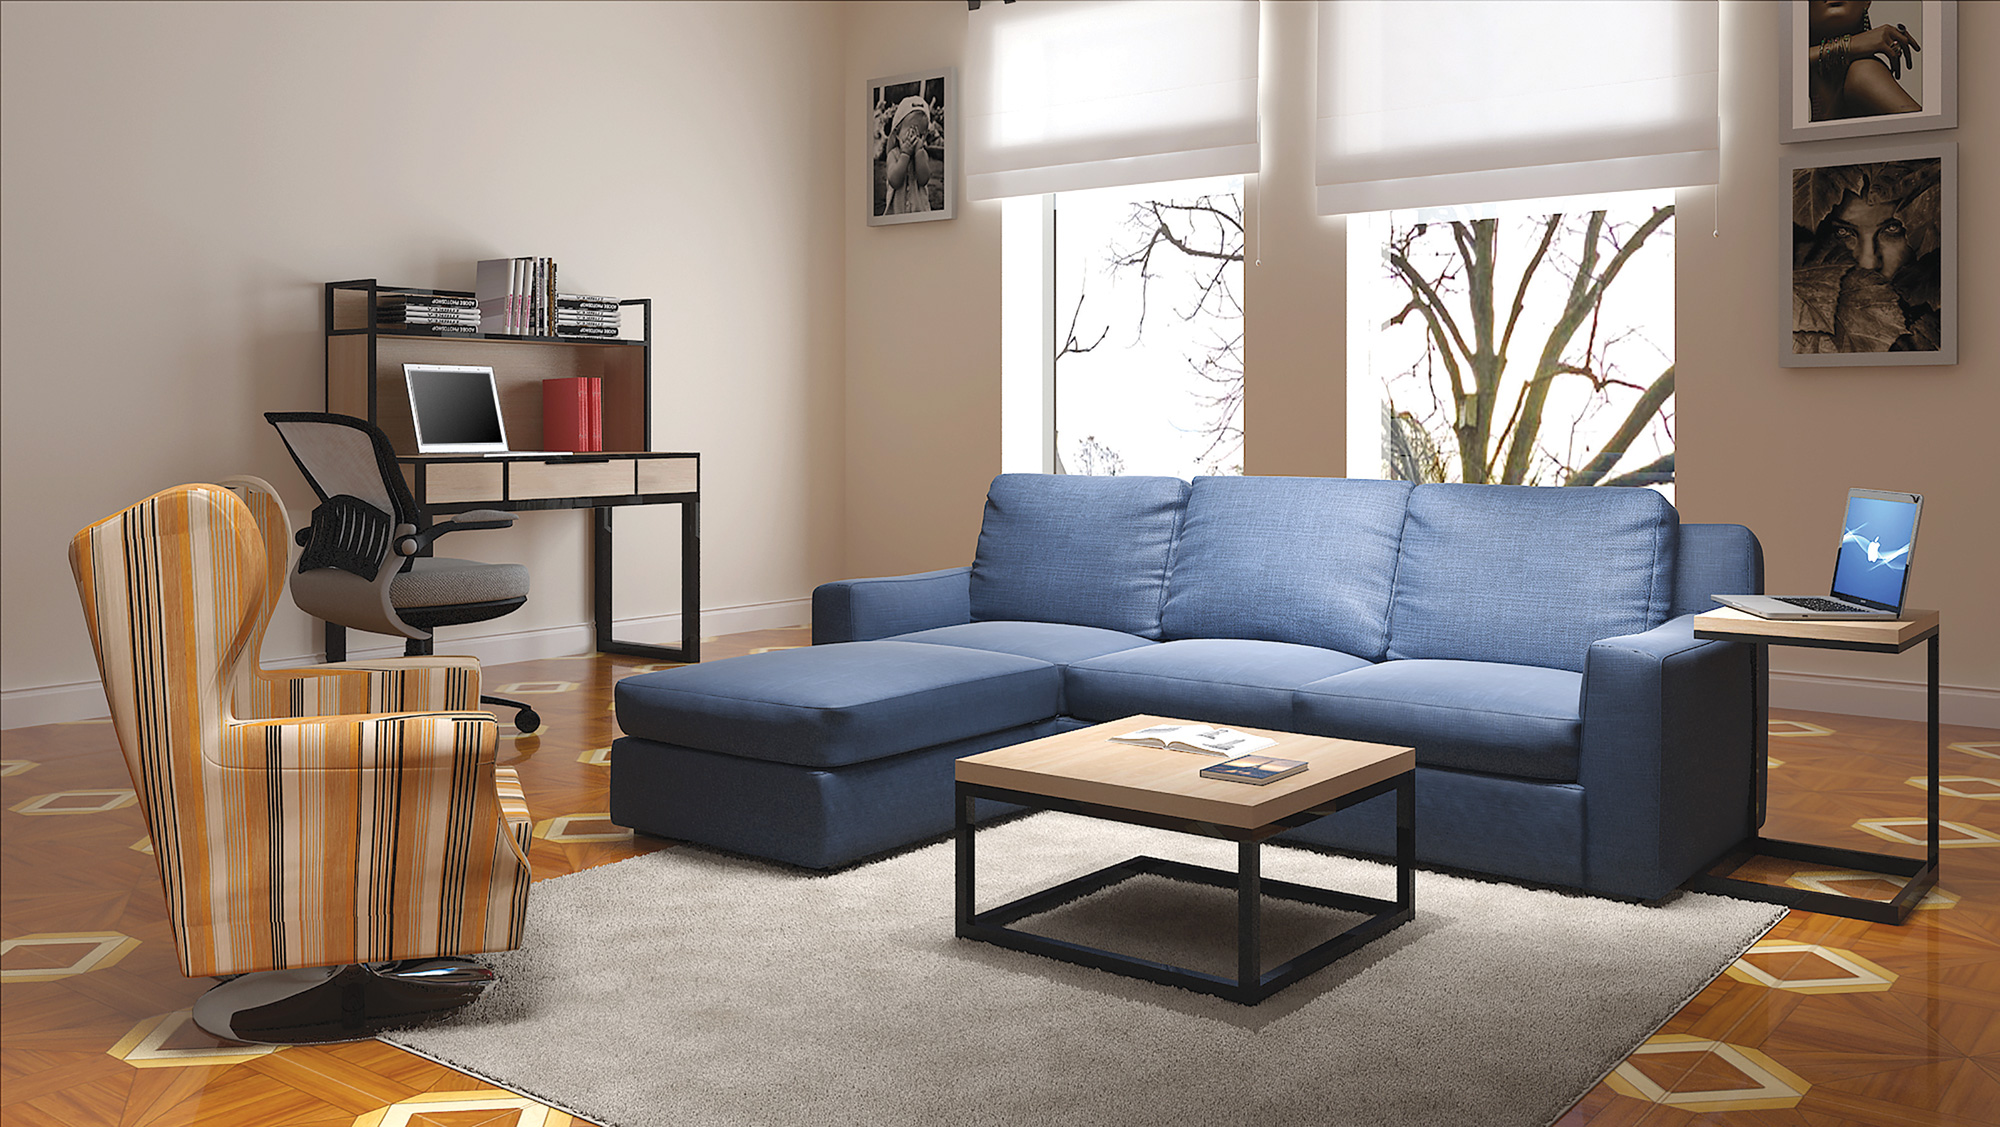 f3 student housing living room furniture